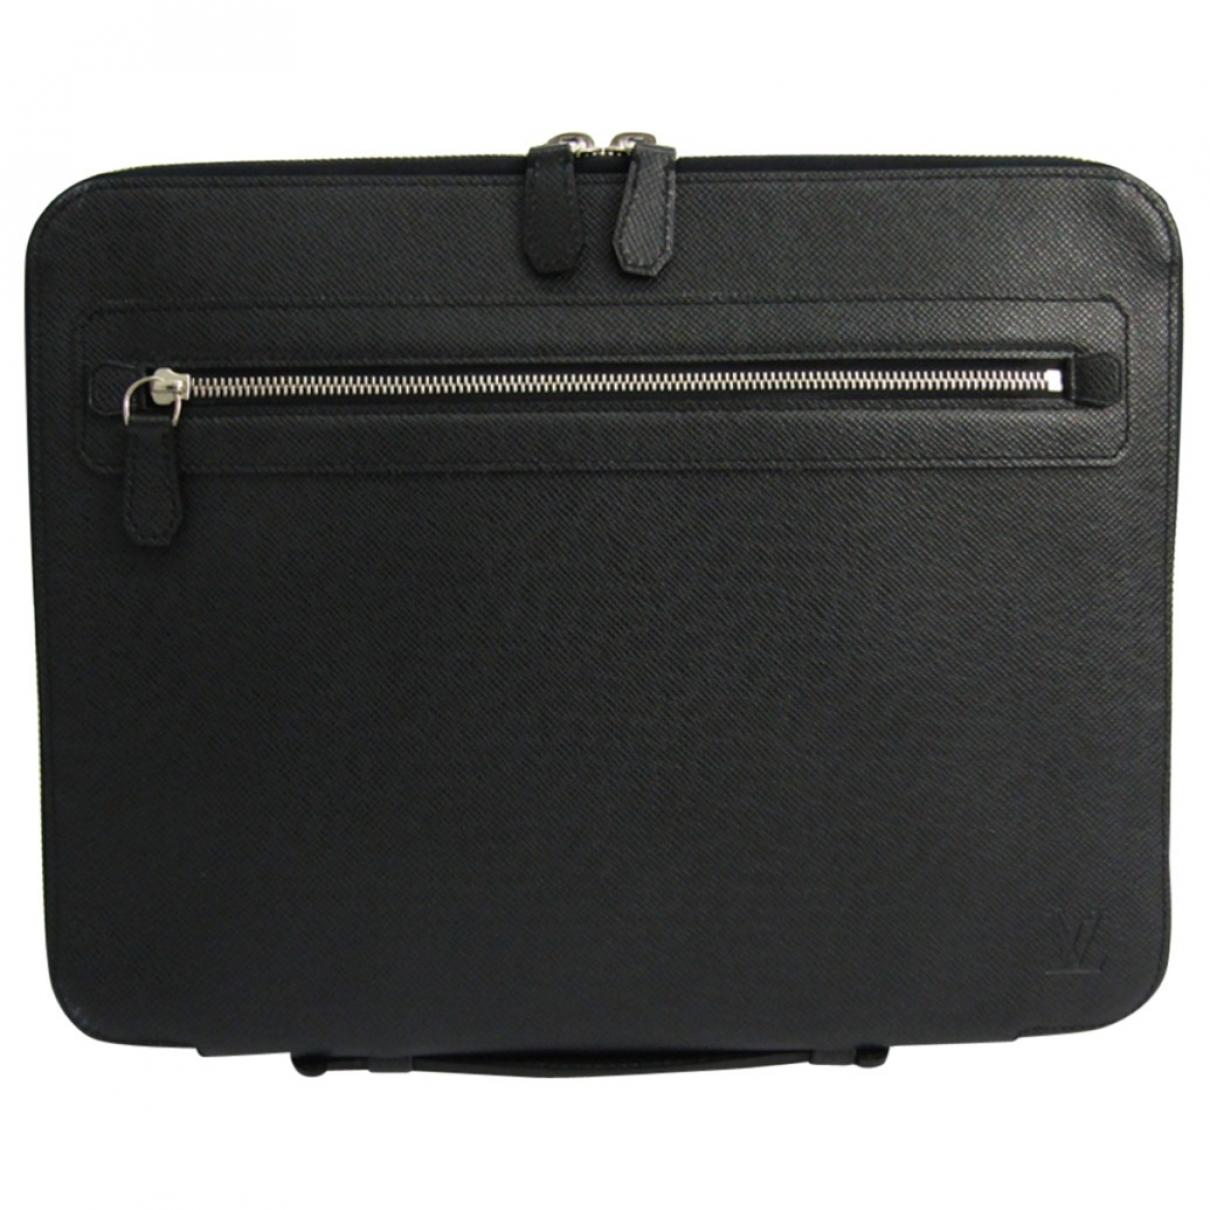 Louis Vuitton Black Leather Small Bag, Wallets & Cases for Men - Lyst